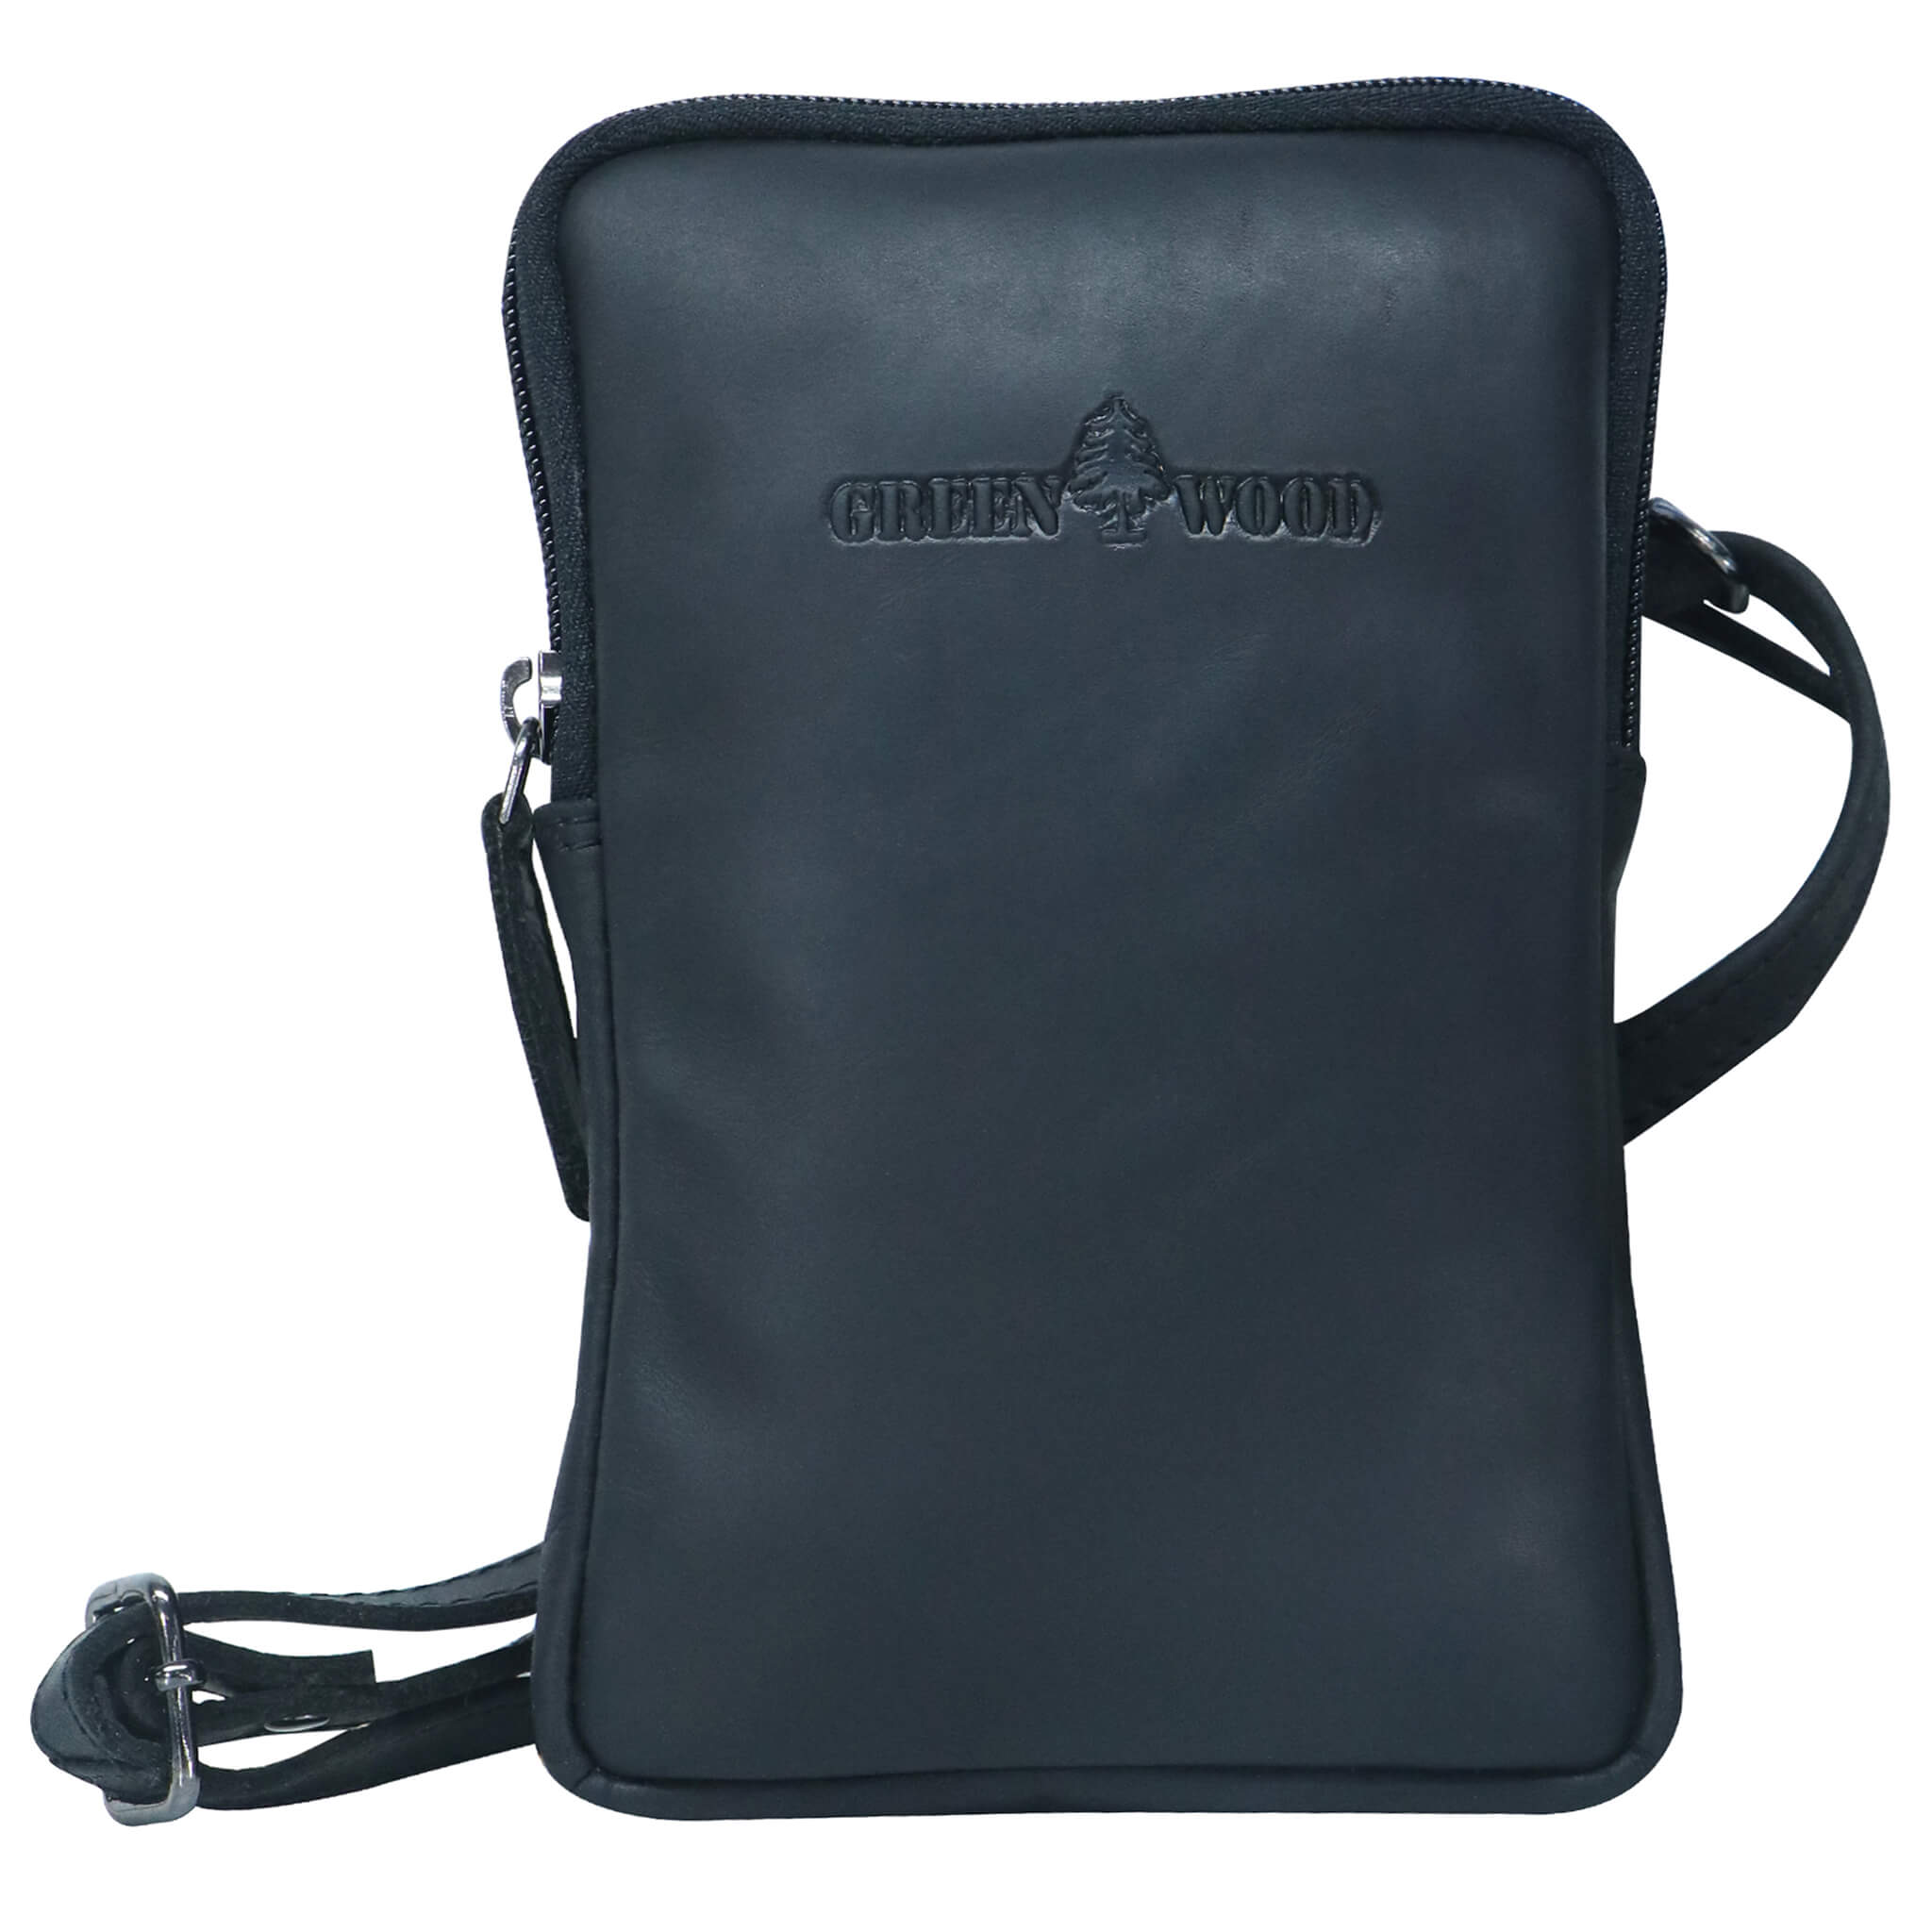 Oli Phone Bag Crossbody Smartphone Bag with Shoulder Strap Leather